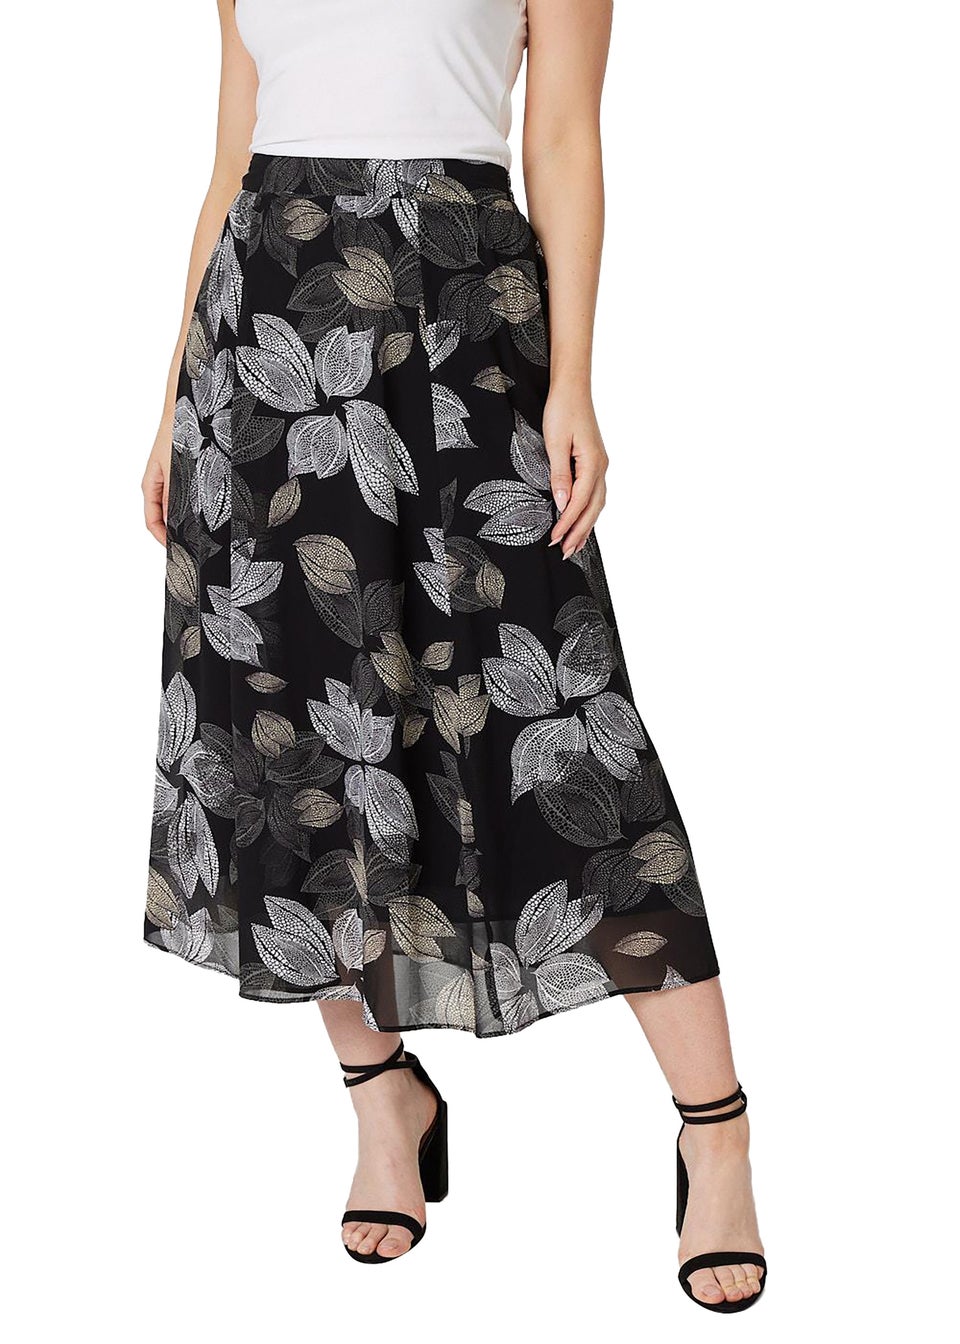 Izabel London Black Leaf Print High Waist Midi Skirt - Matalan